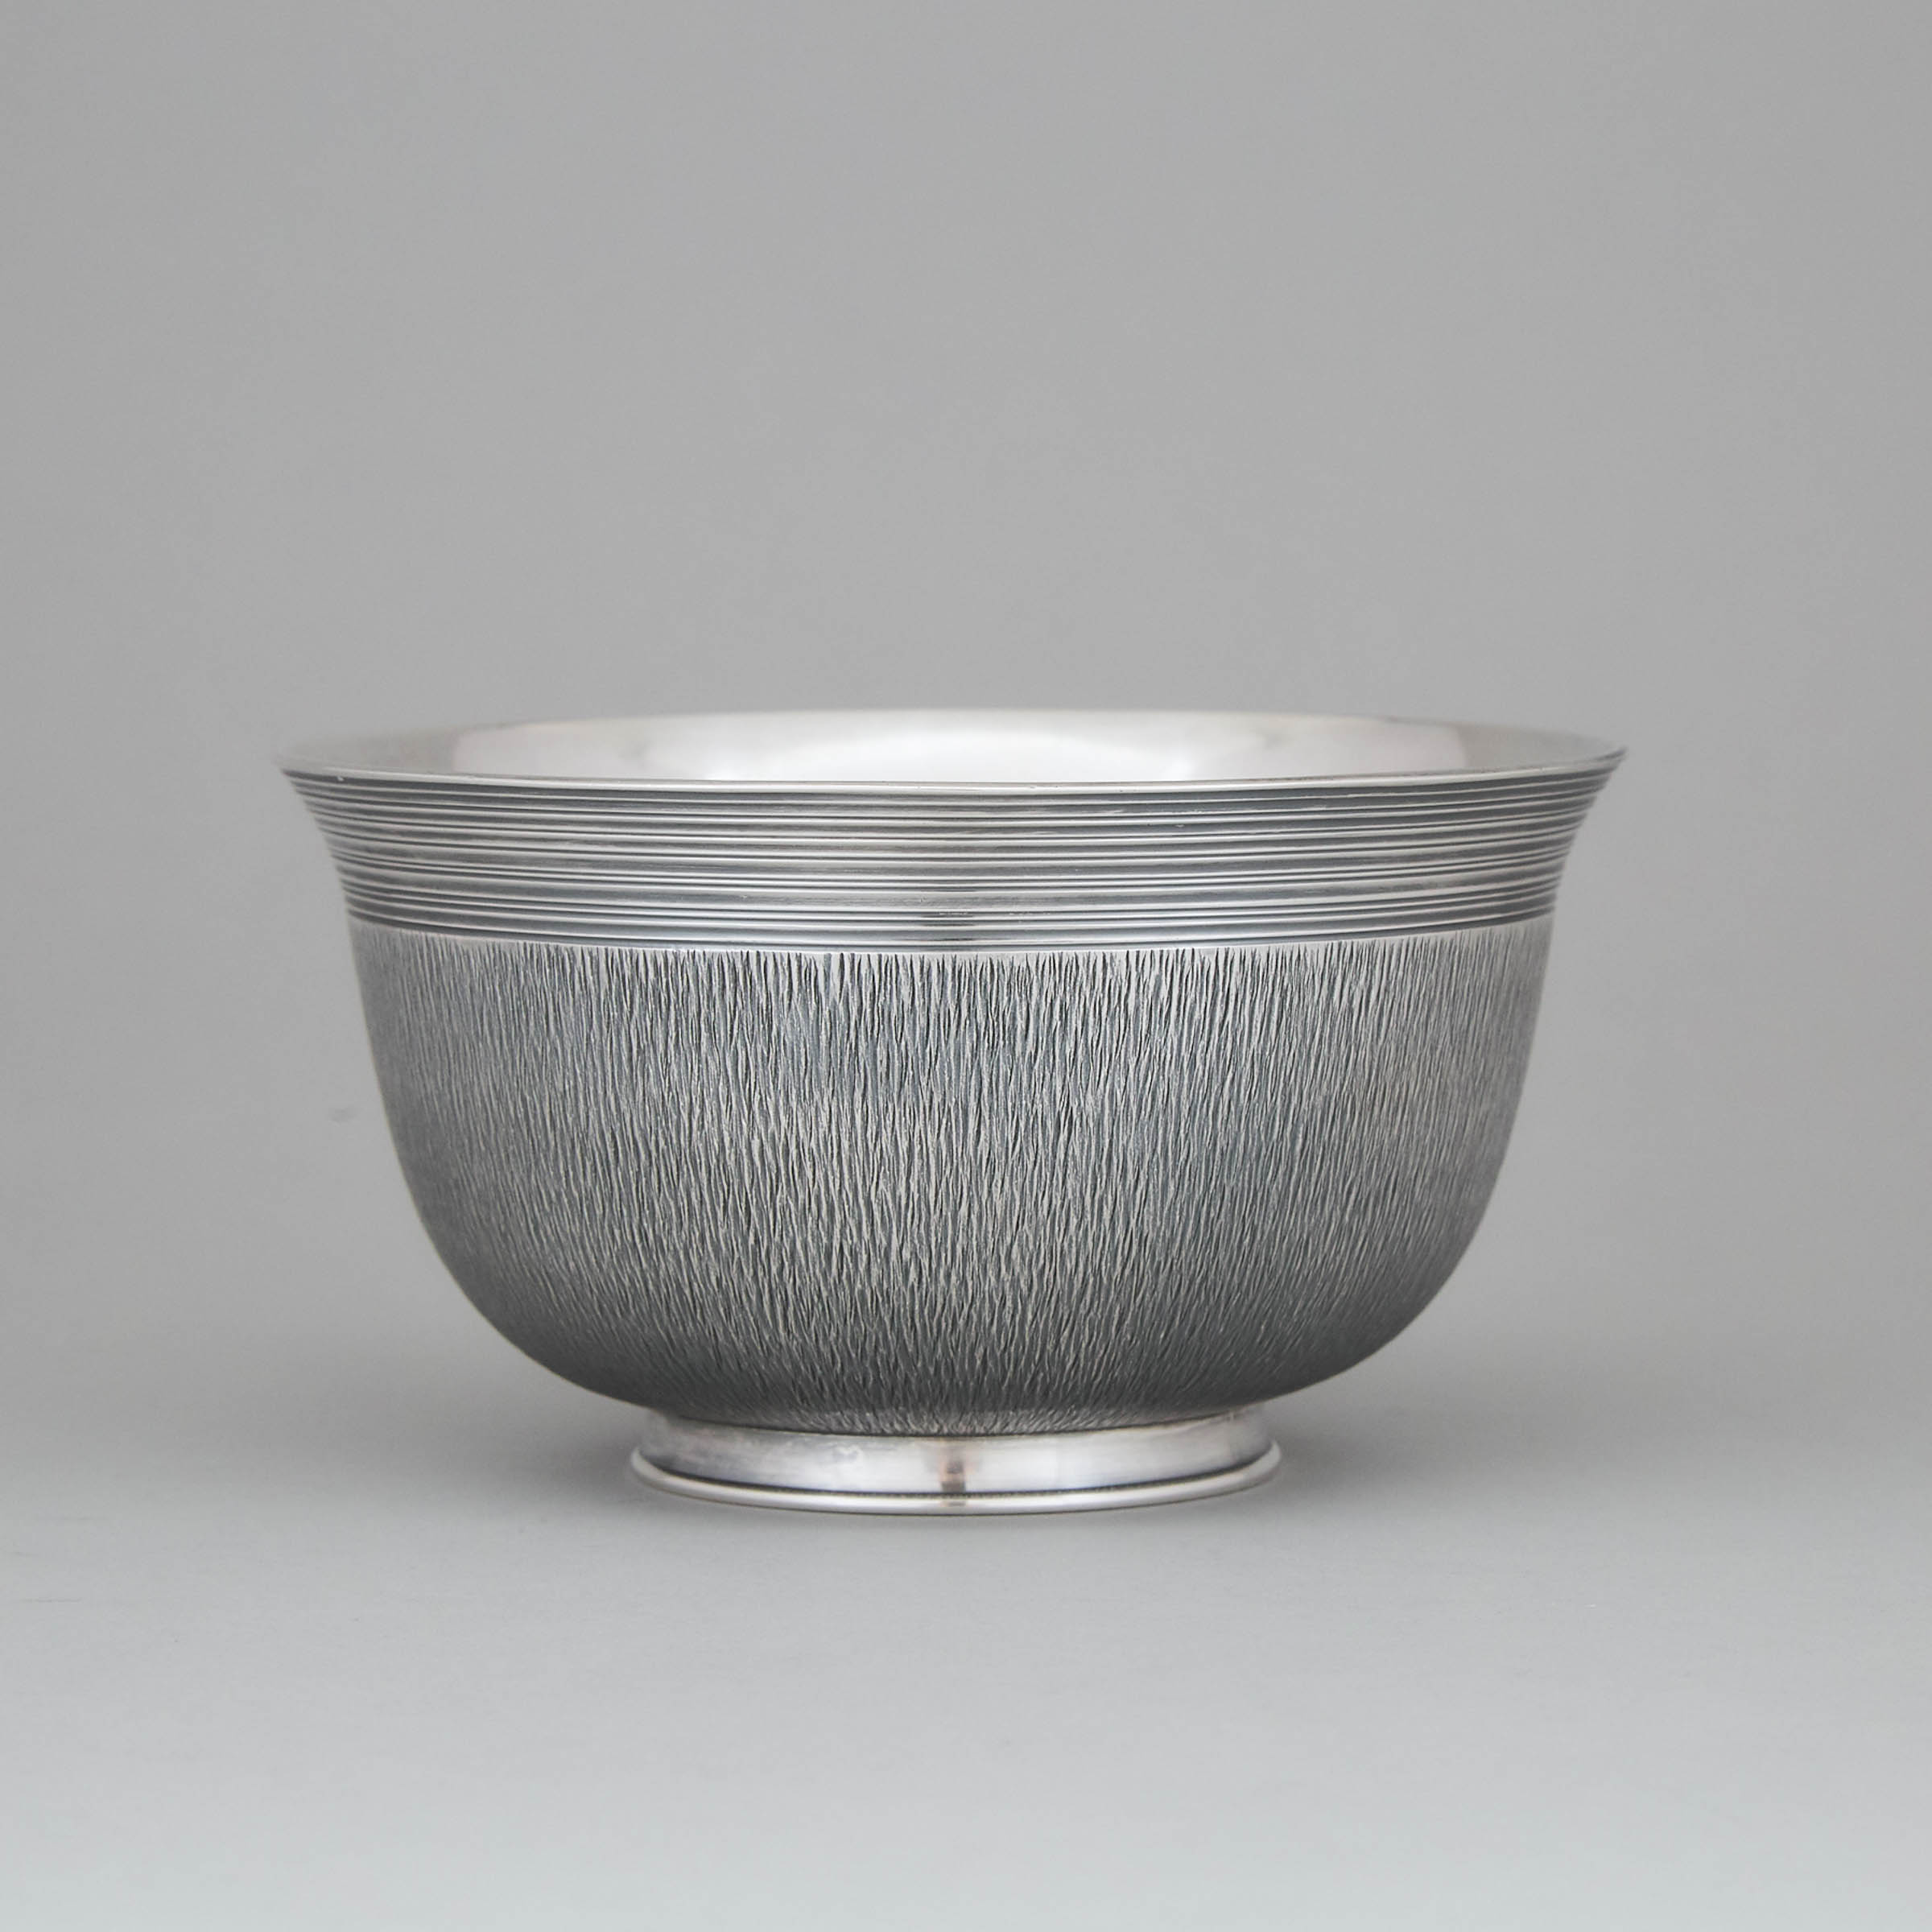 Japanese Silver Bowl, Muramatsu, Tokyo, 20th century